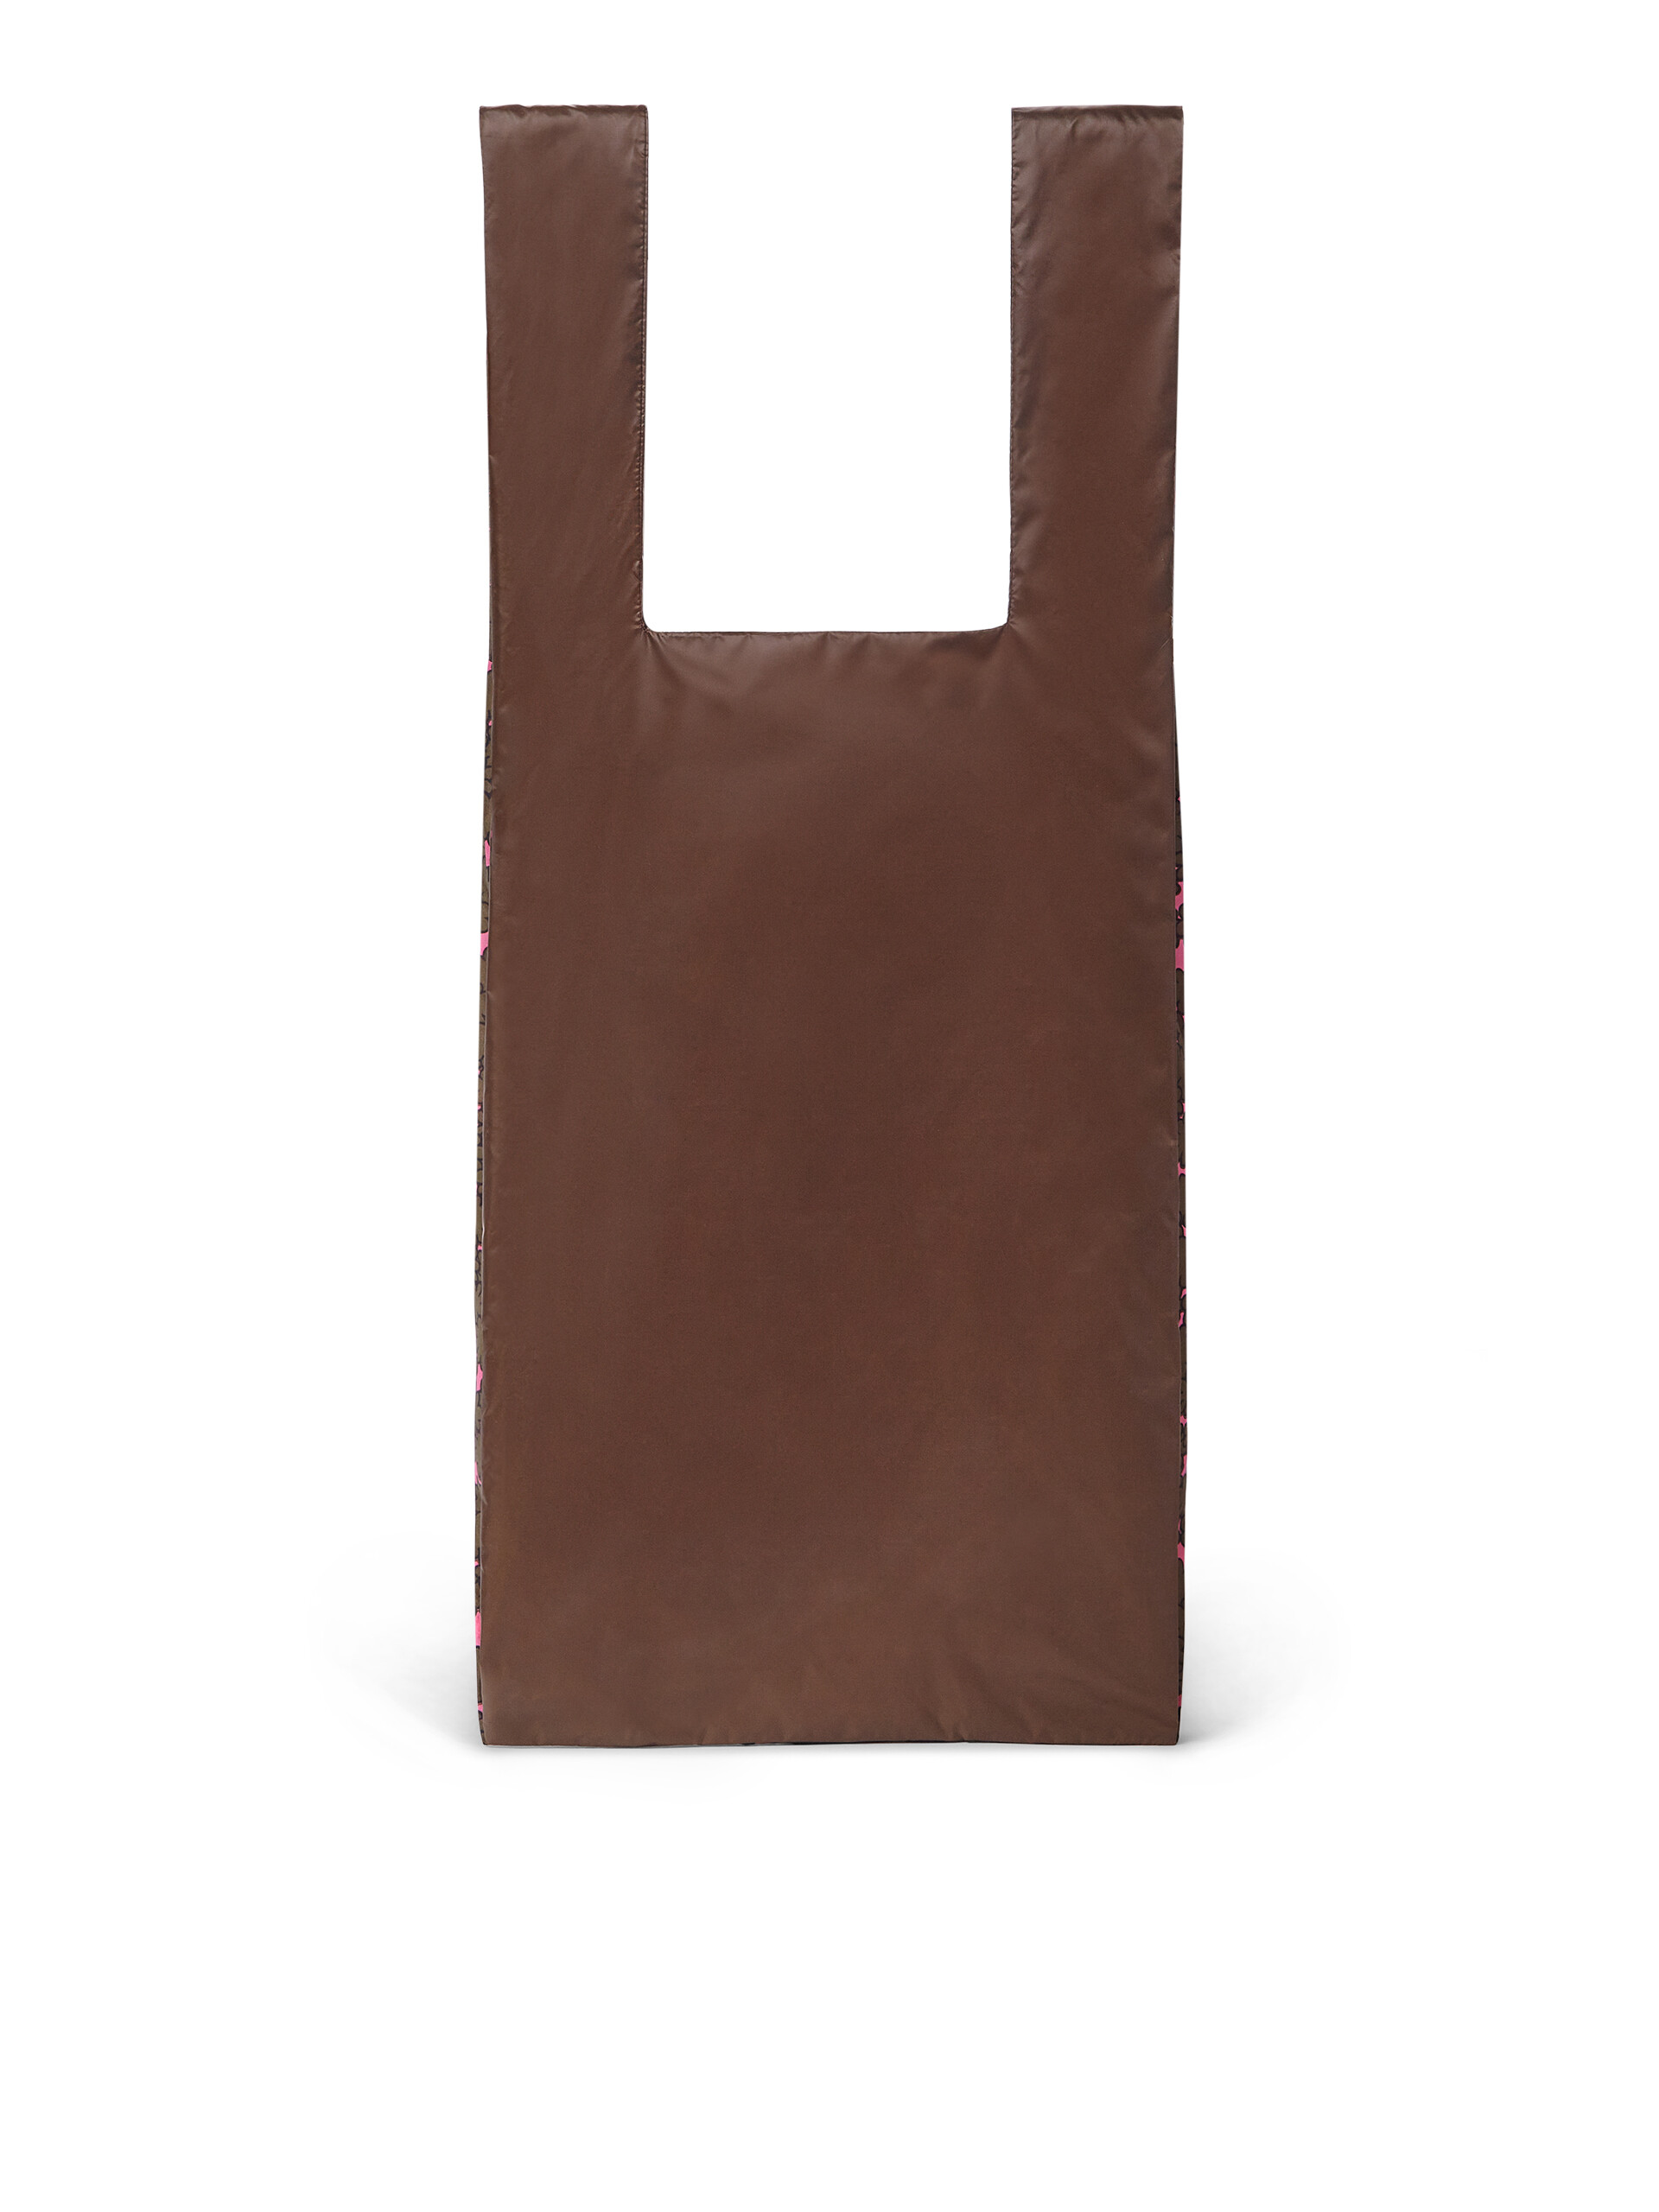 MARNI MARKET viscose shopping bag with floral print - Bags - Image 3